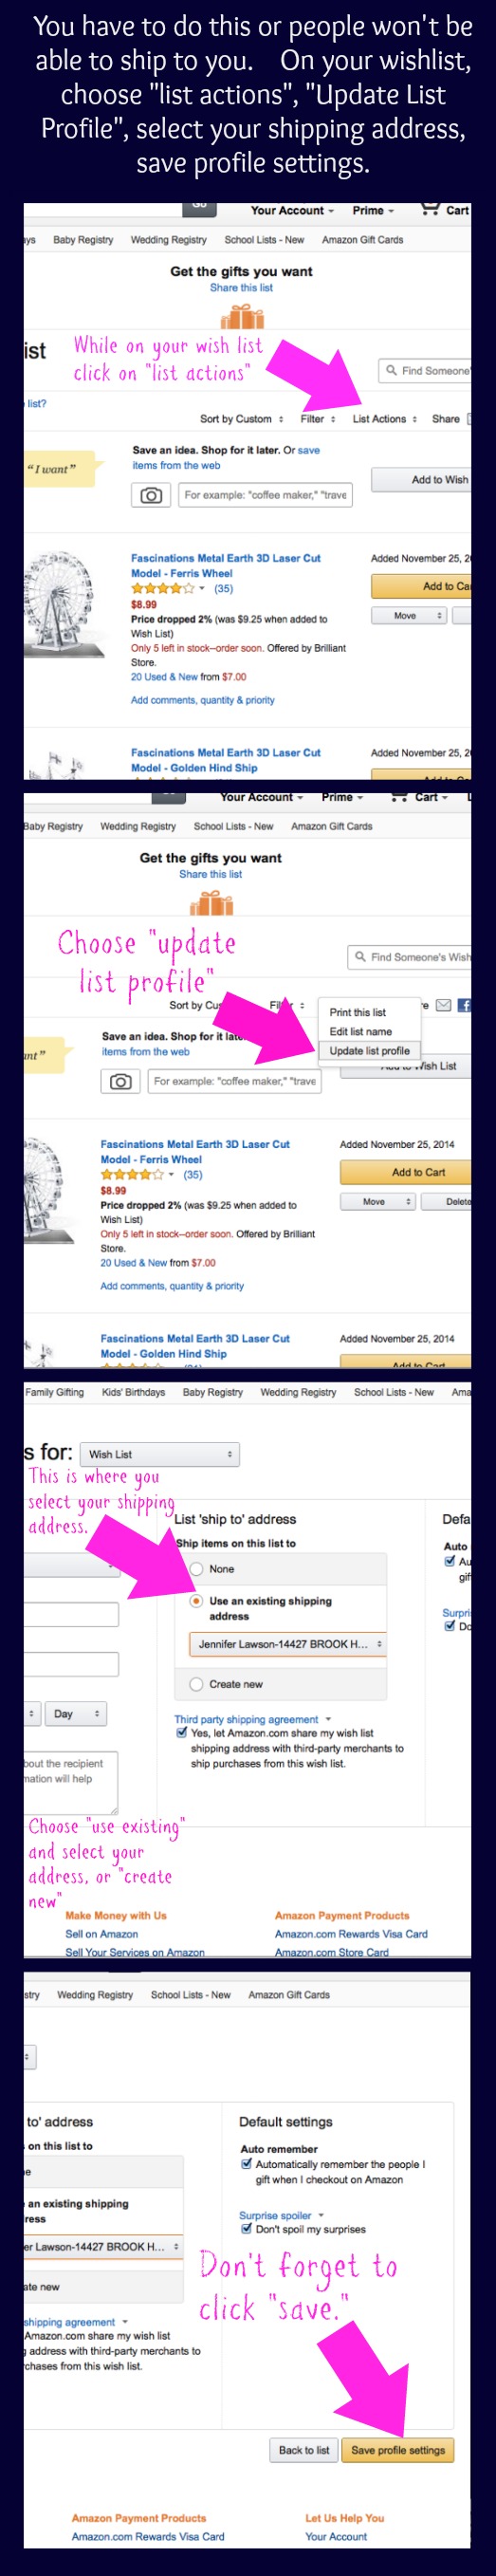 Gift to add list card amazon wish 5 Amazon